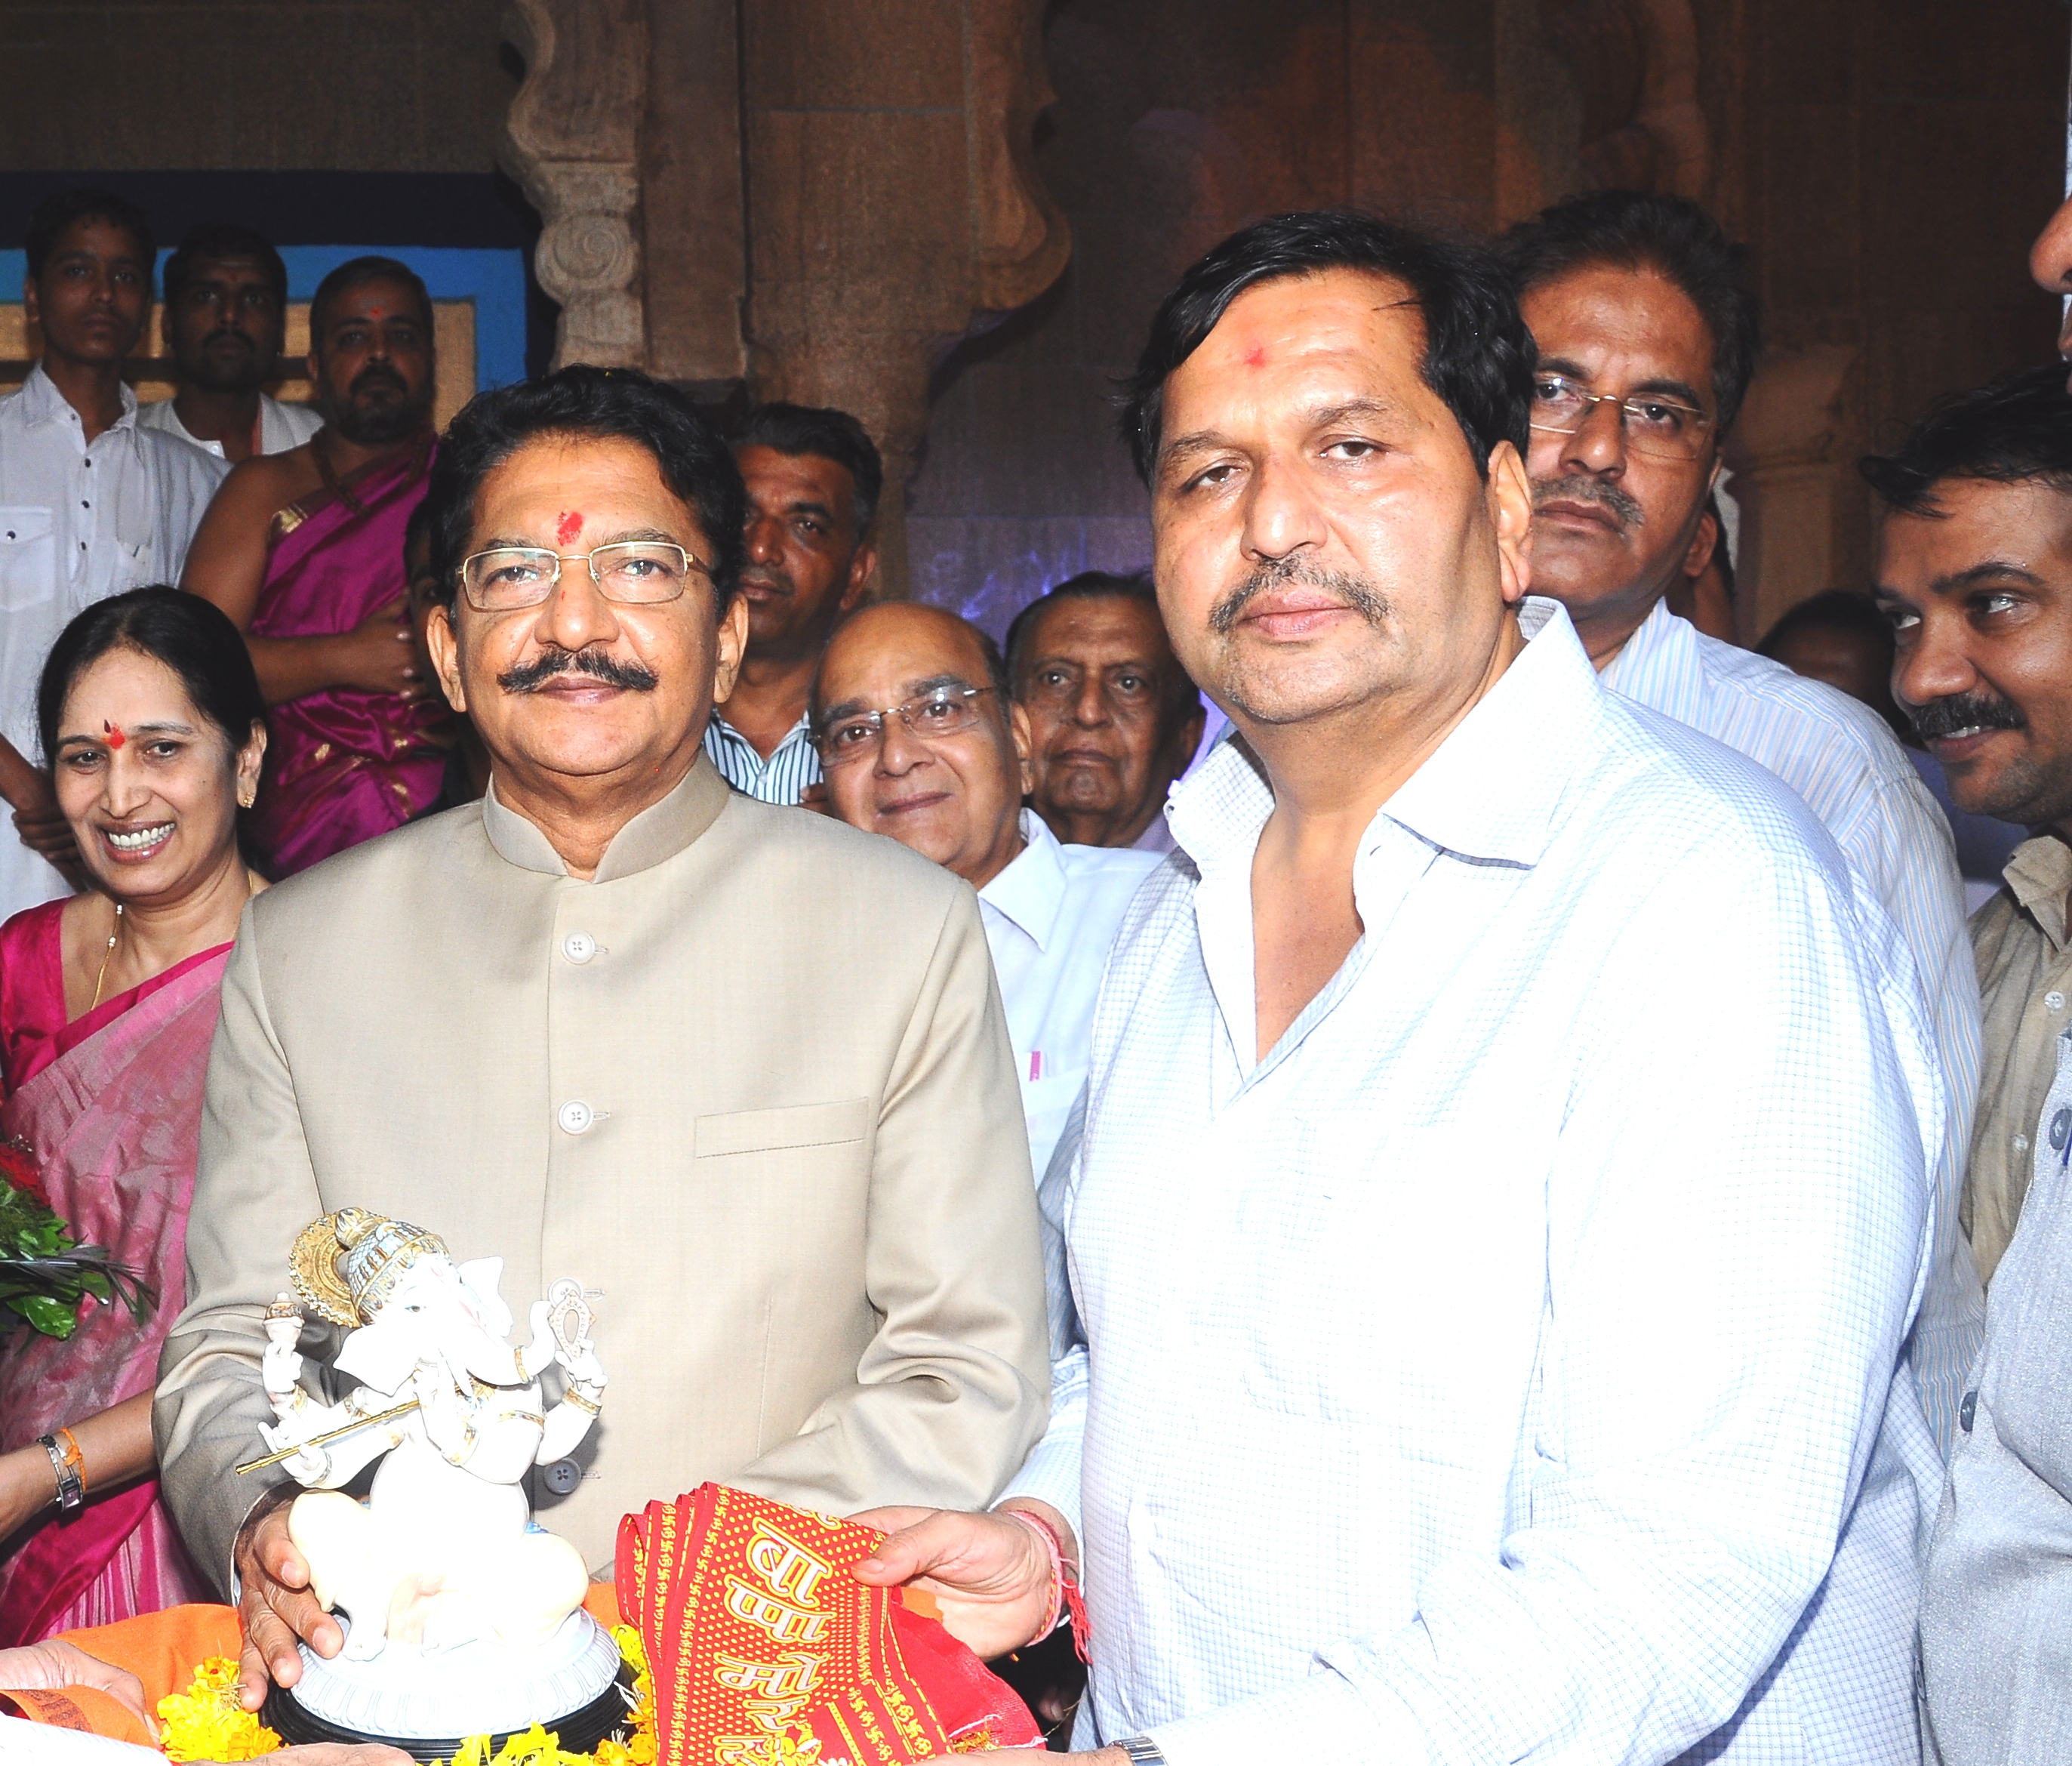 MLA Mangal Prabhat Lodha with Governor C. Vidyasagar Rao